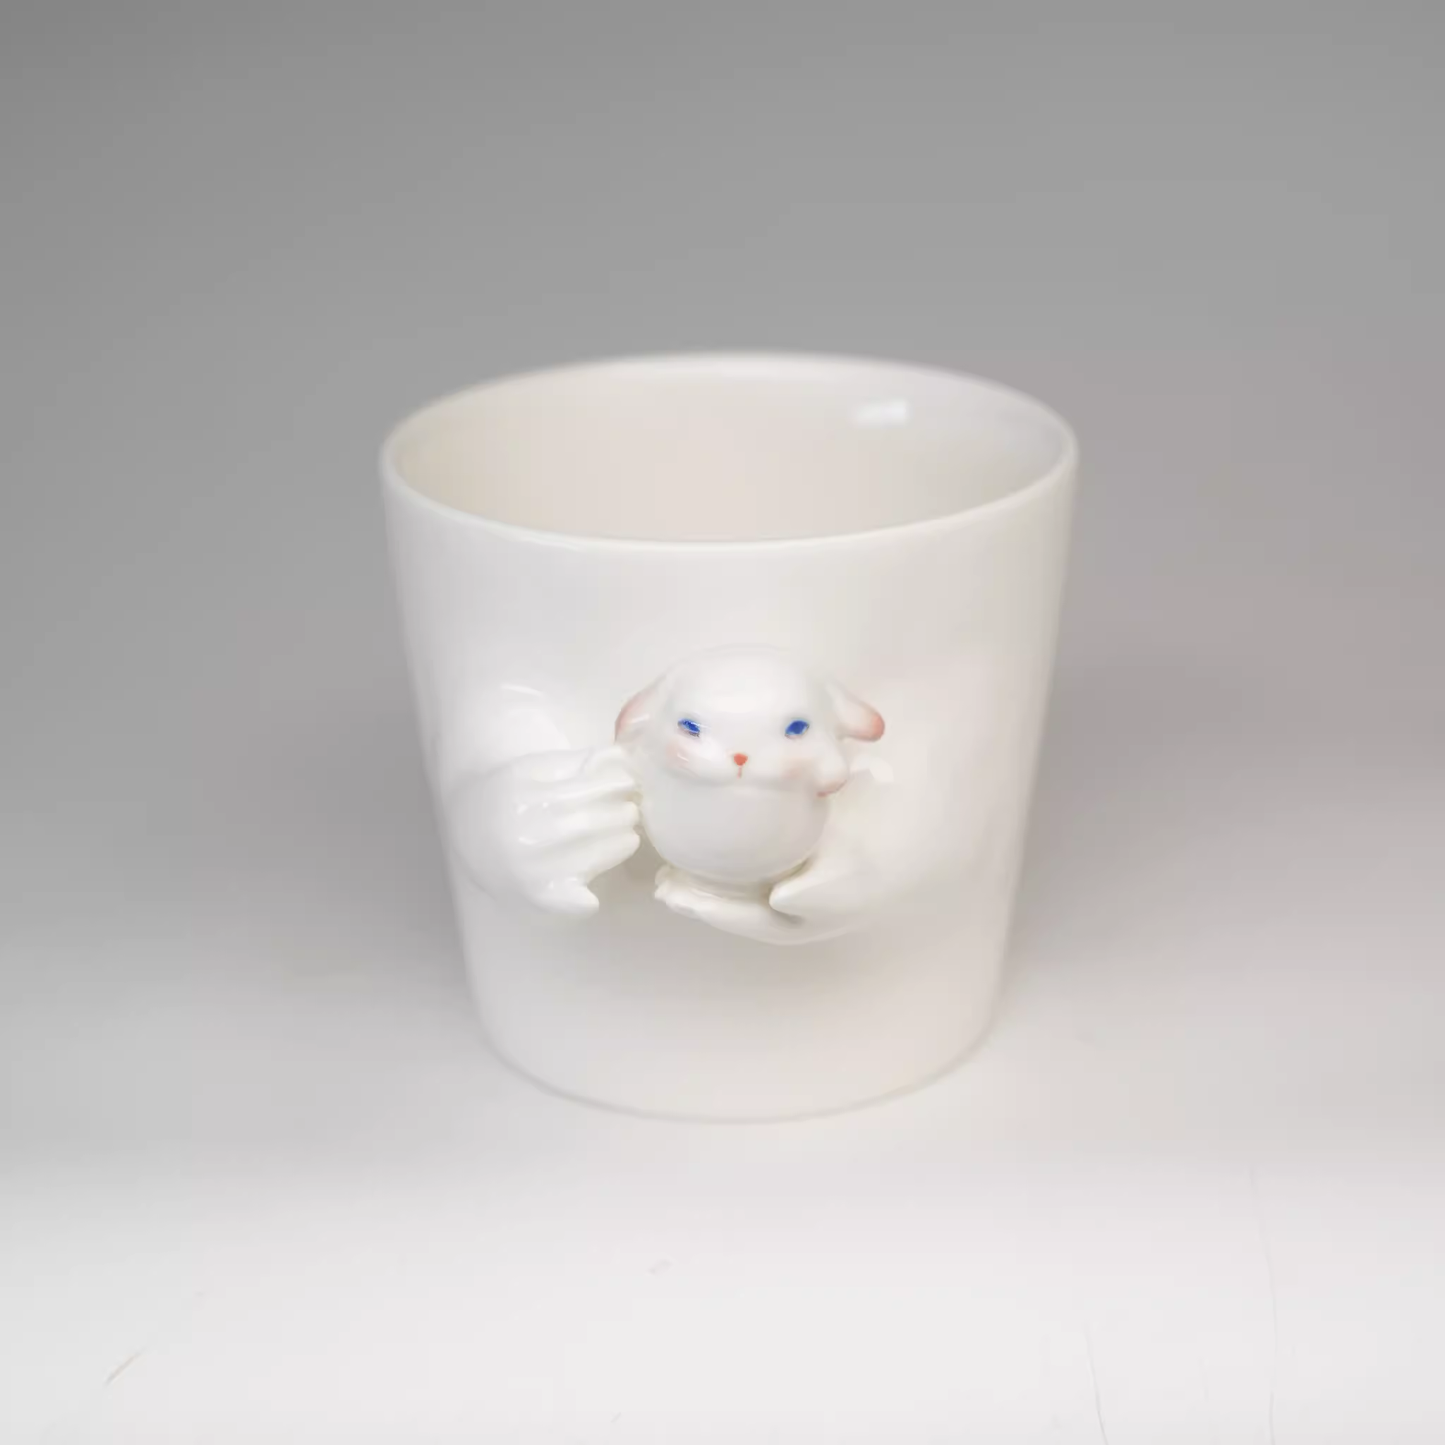 Cute Mug With a Tiny Rabbit